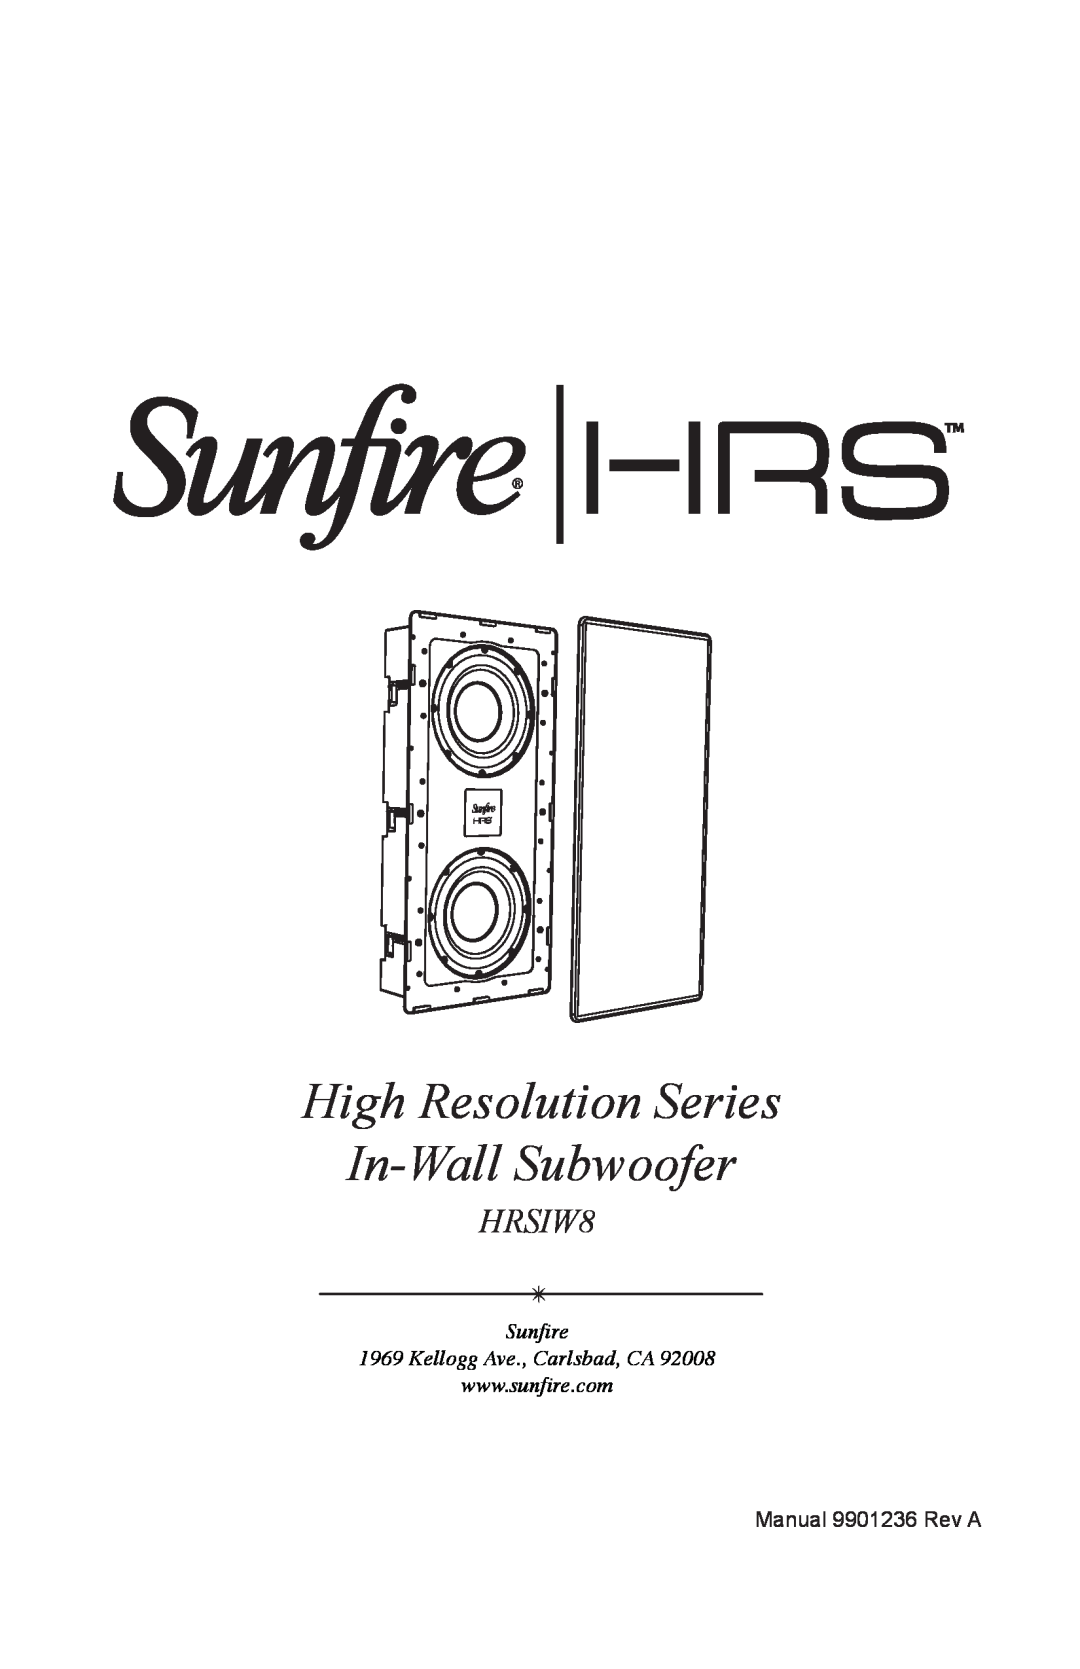 Sunfire HRSIW8 user manual High Resolution Series In-WallSubwoofer, Sunfire 1969 Kellogg Ave., Carlsbad, CA 